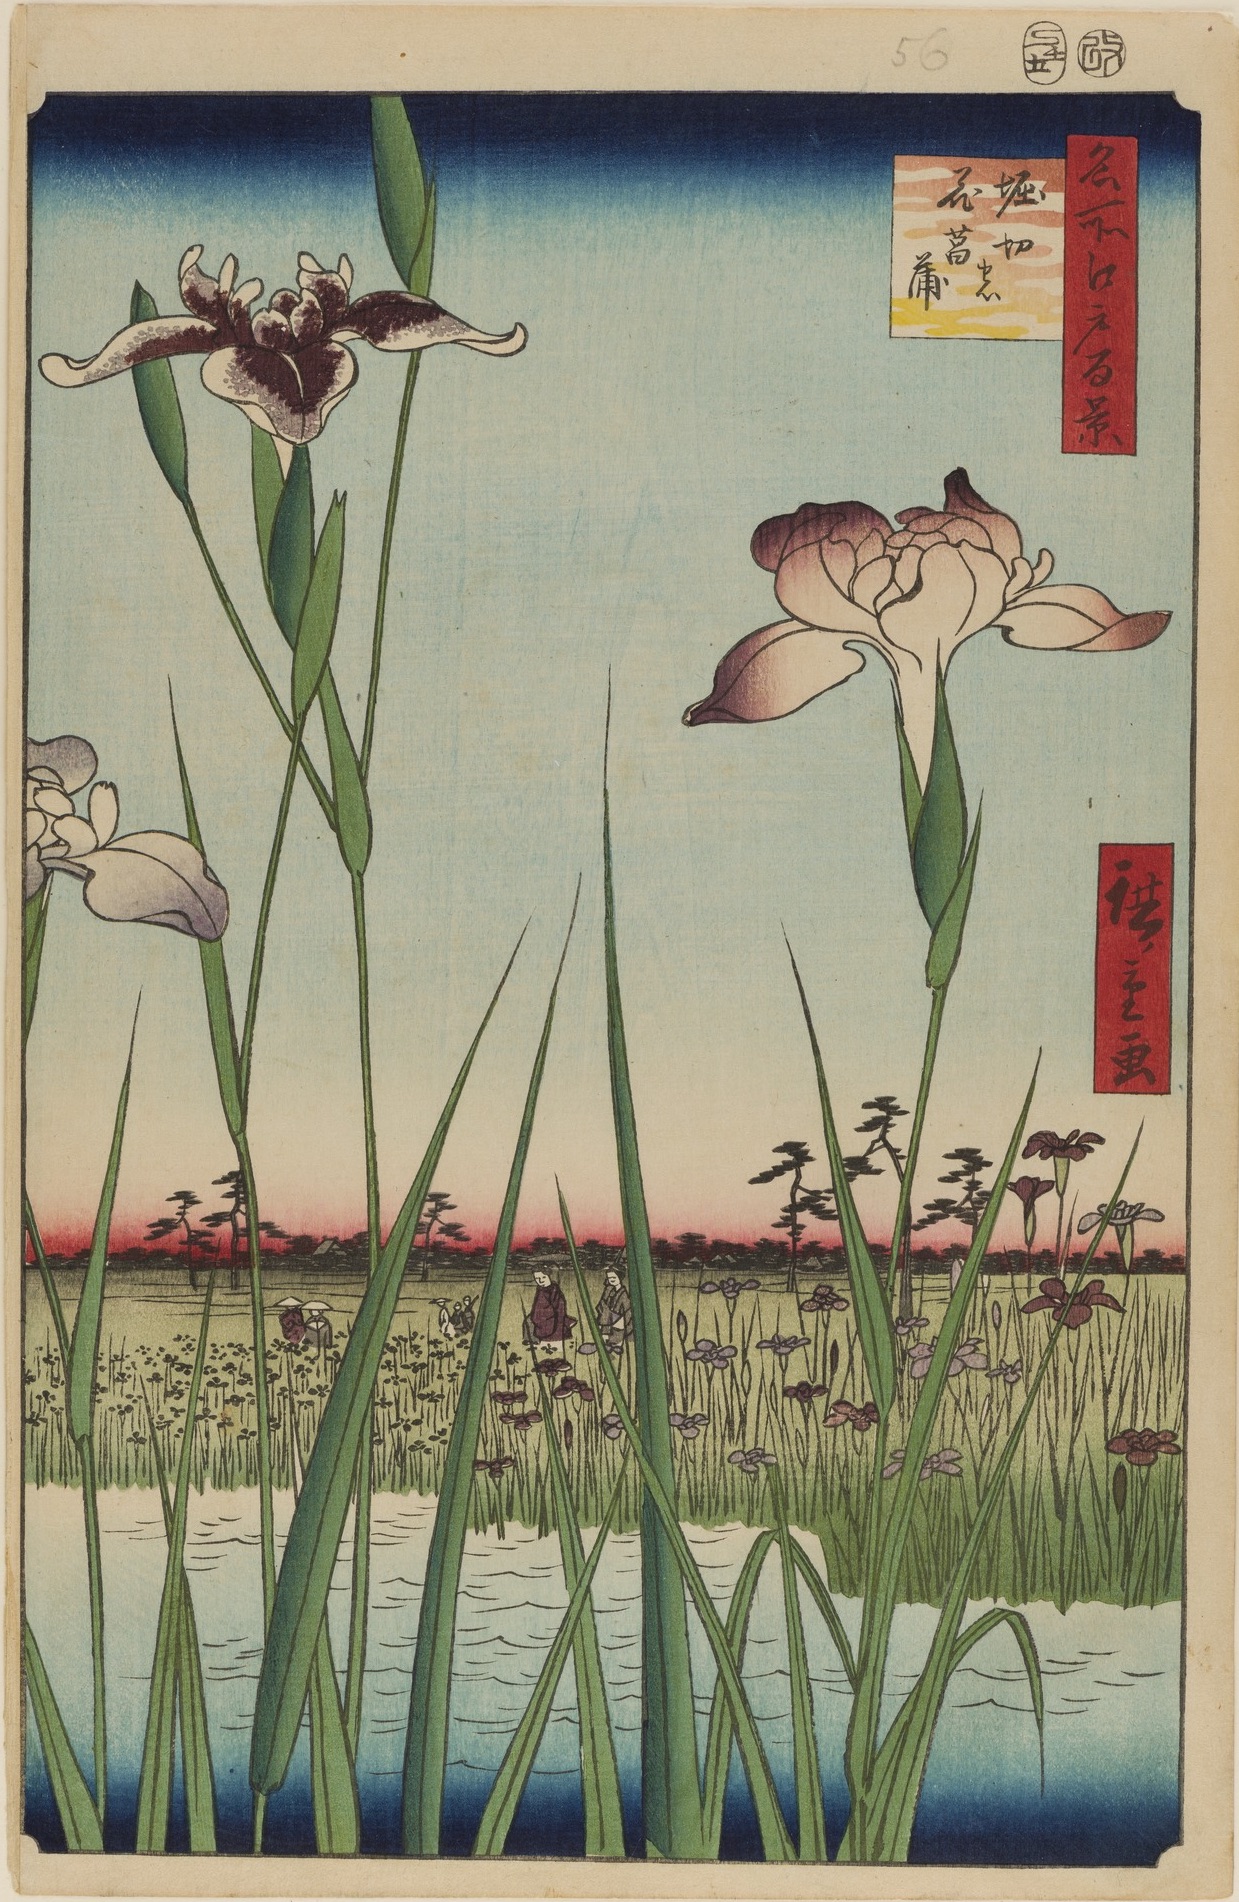 Horikiri Iris Garden by Utagawa Hiroshige - 1856 - 34 x 22,9 cm 